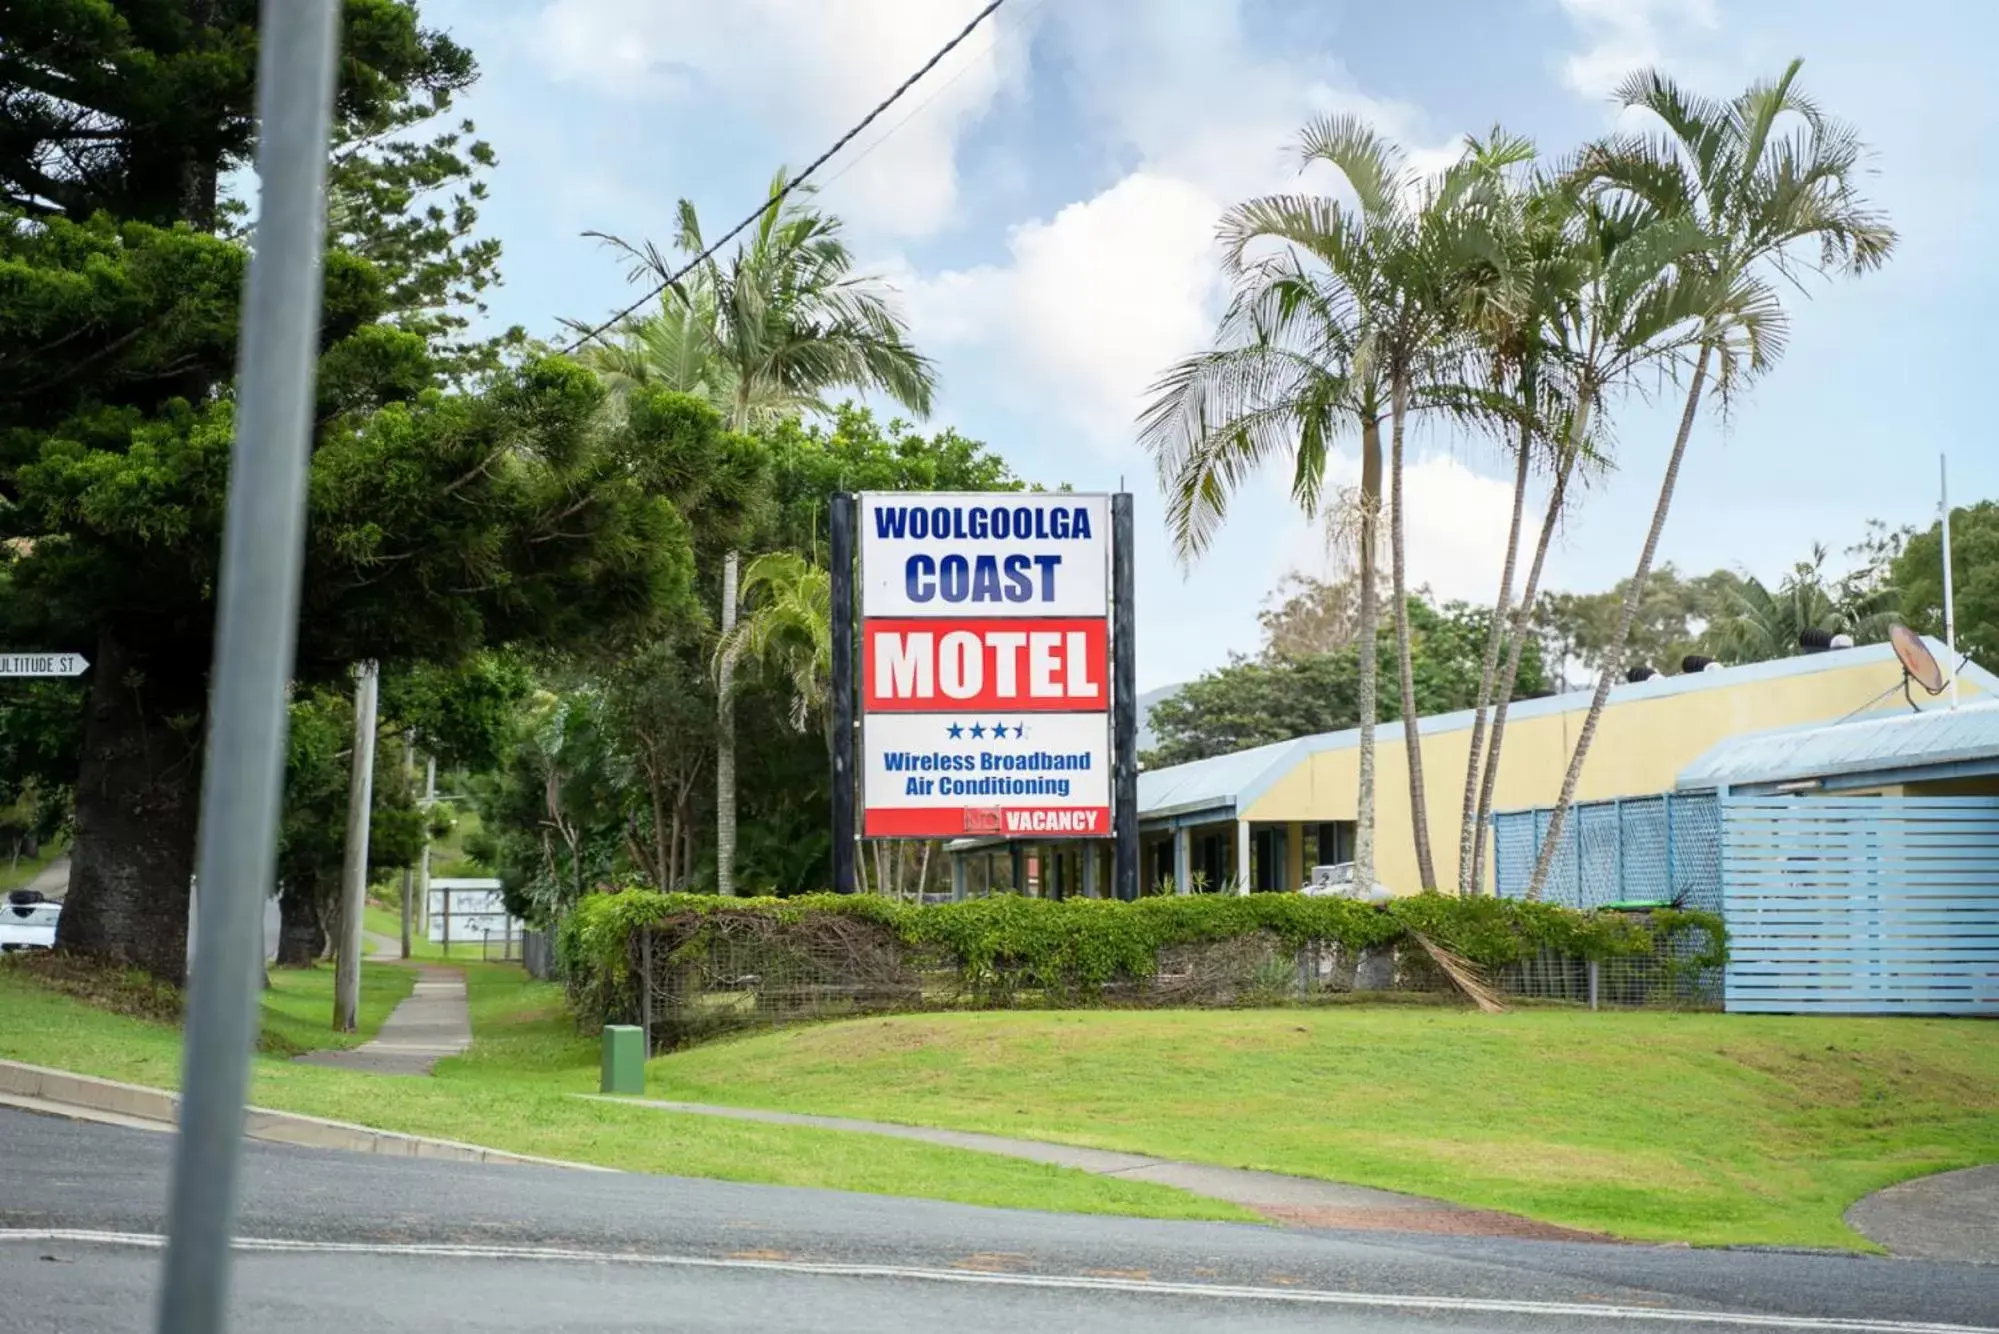 Property logo or sign in Woolgoolga Coast Motel